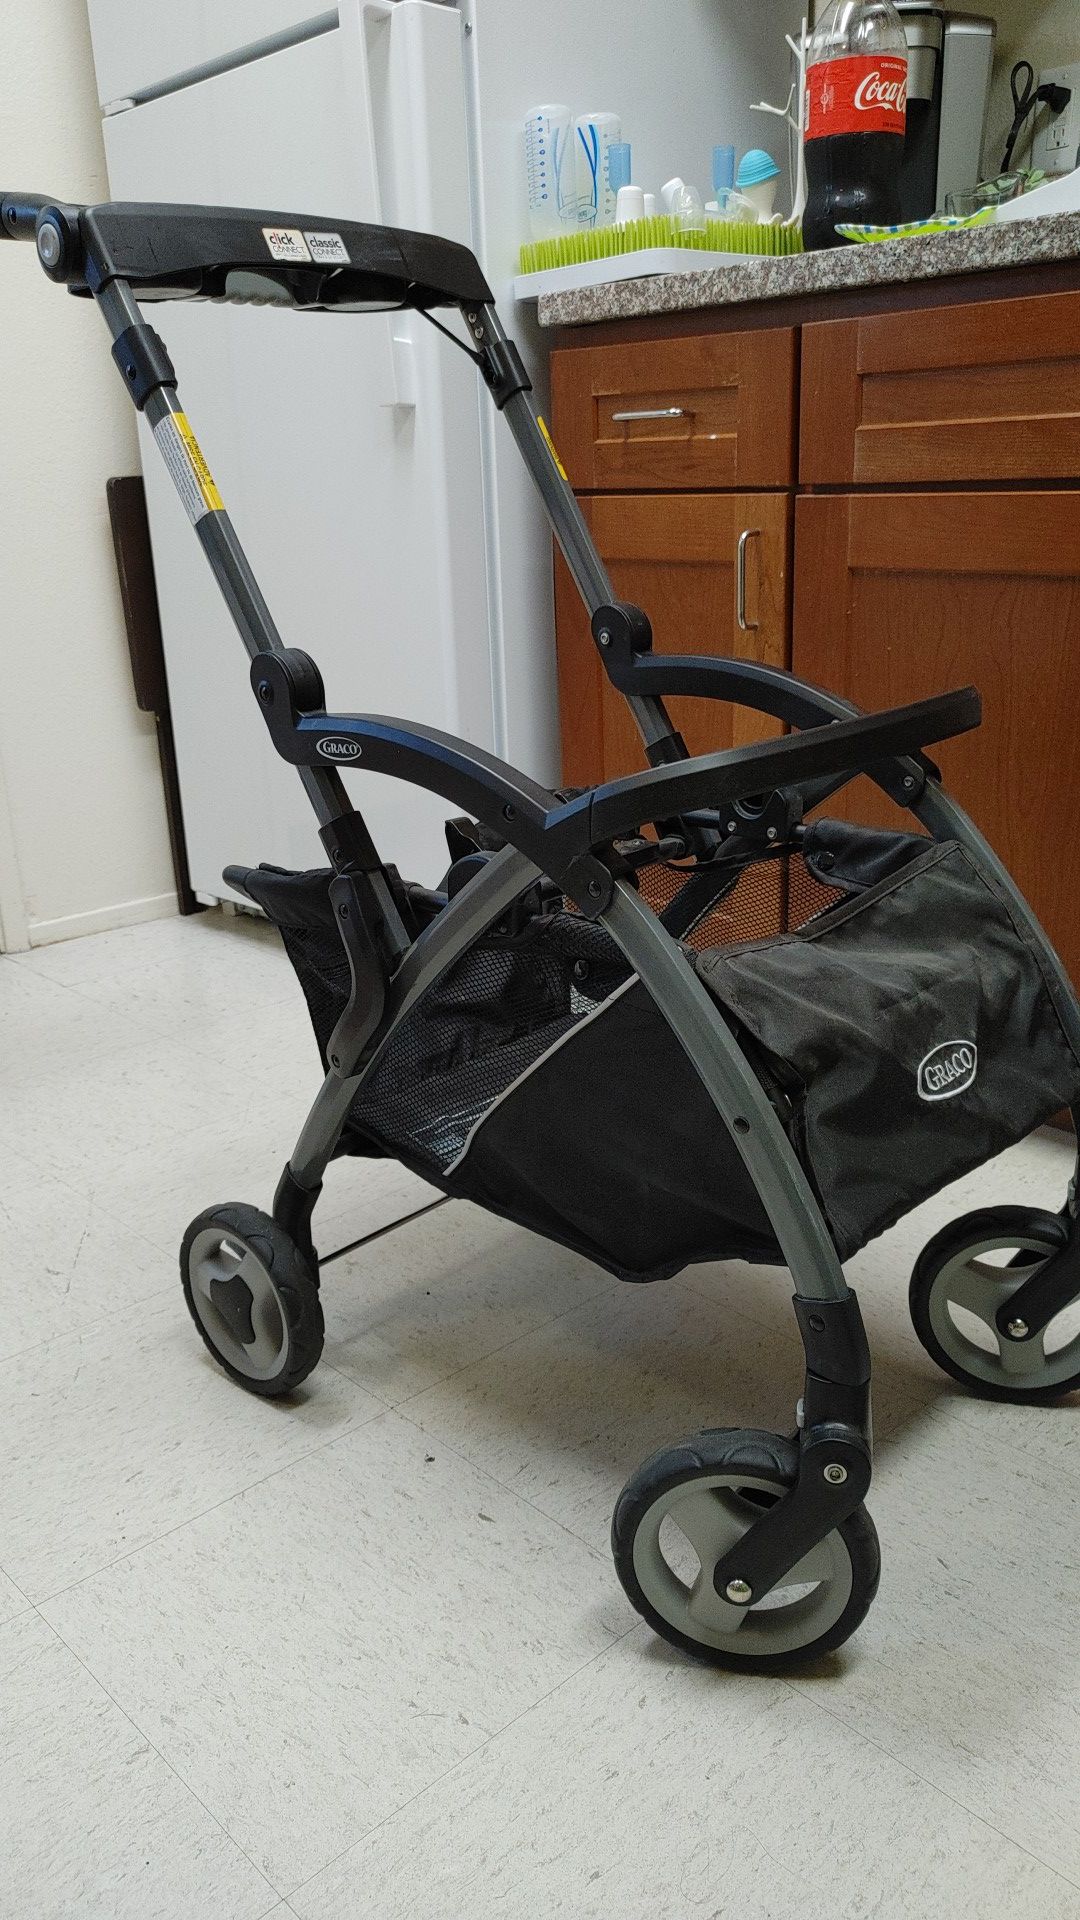 Graco stroller for baby carrier